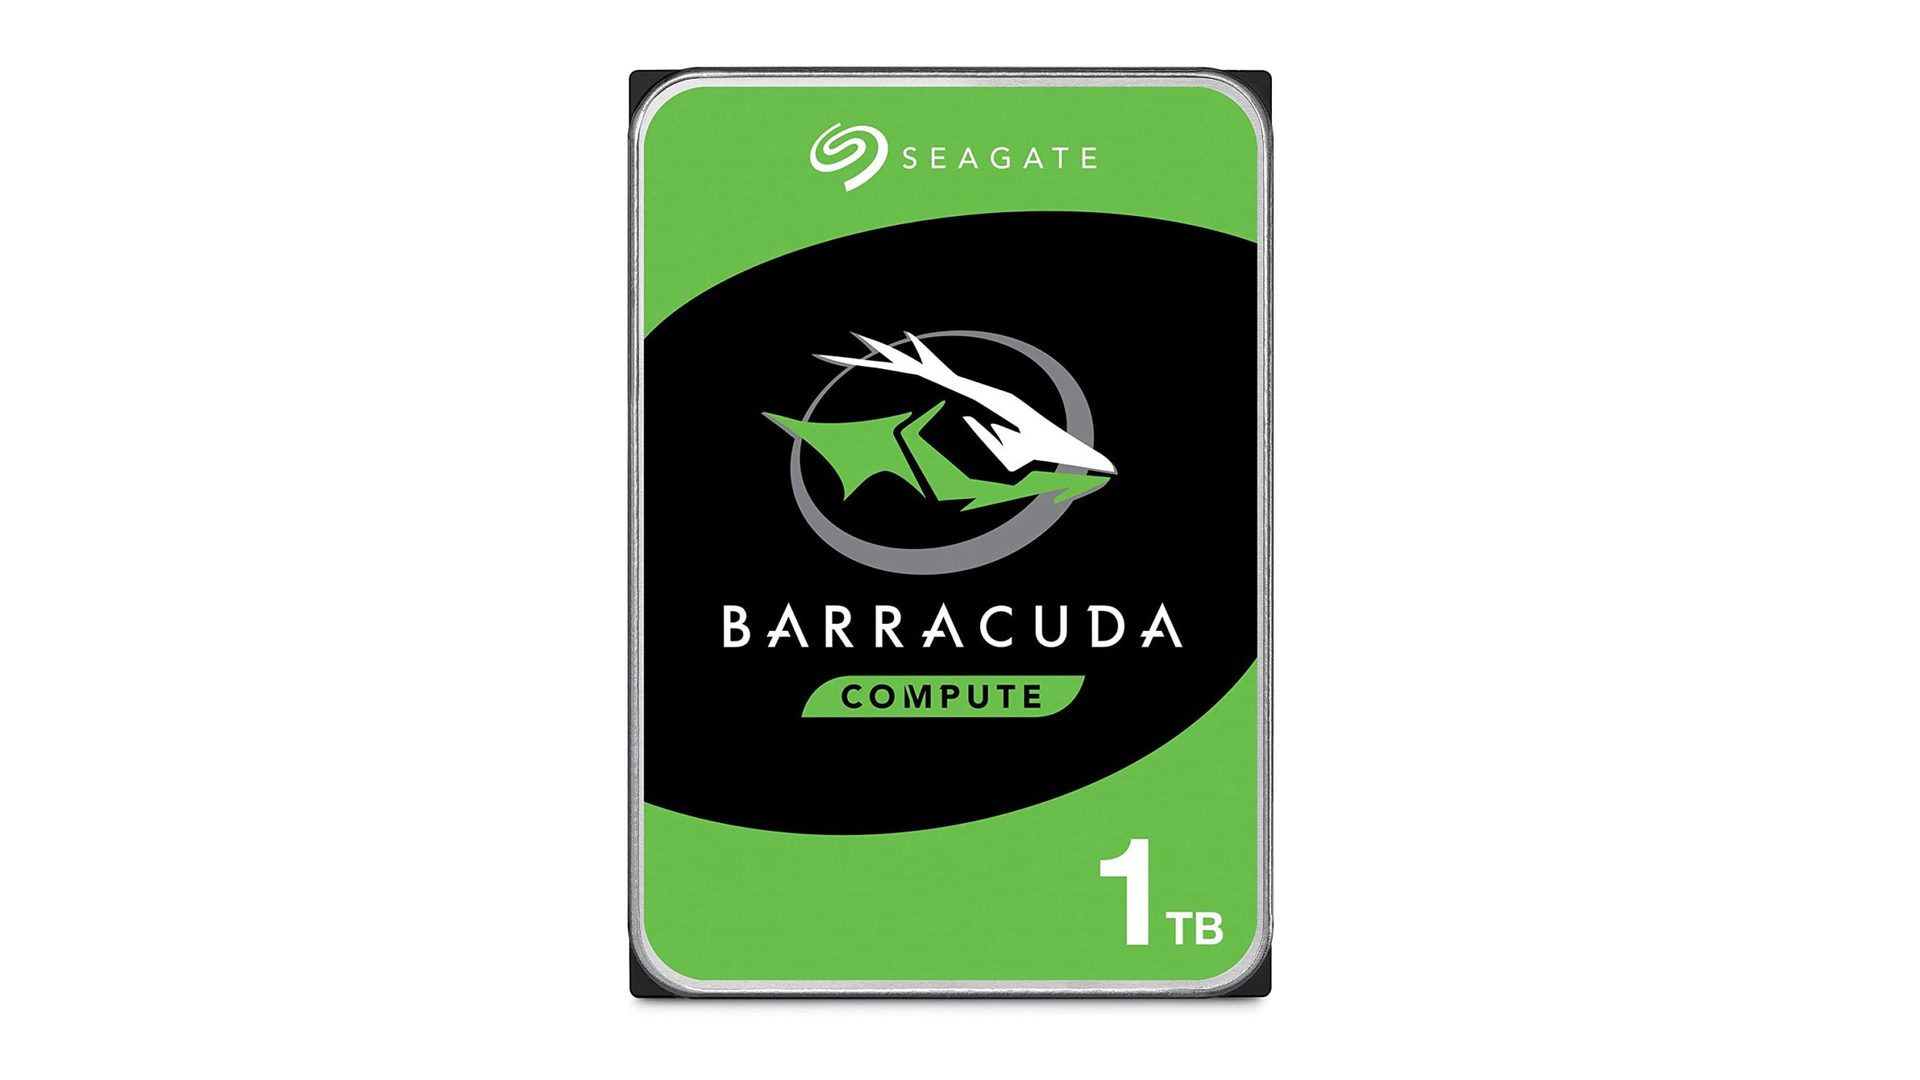 Seagate Barracuda hard drive on a white background